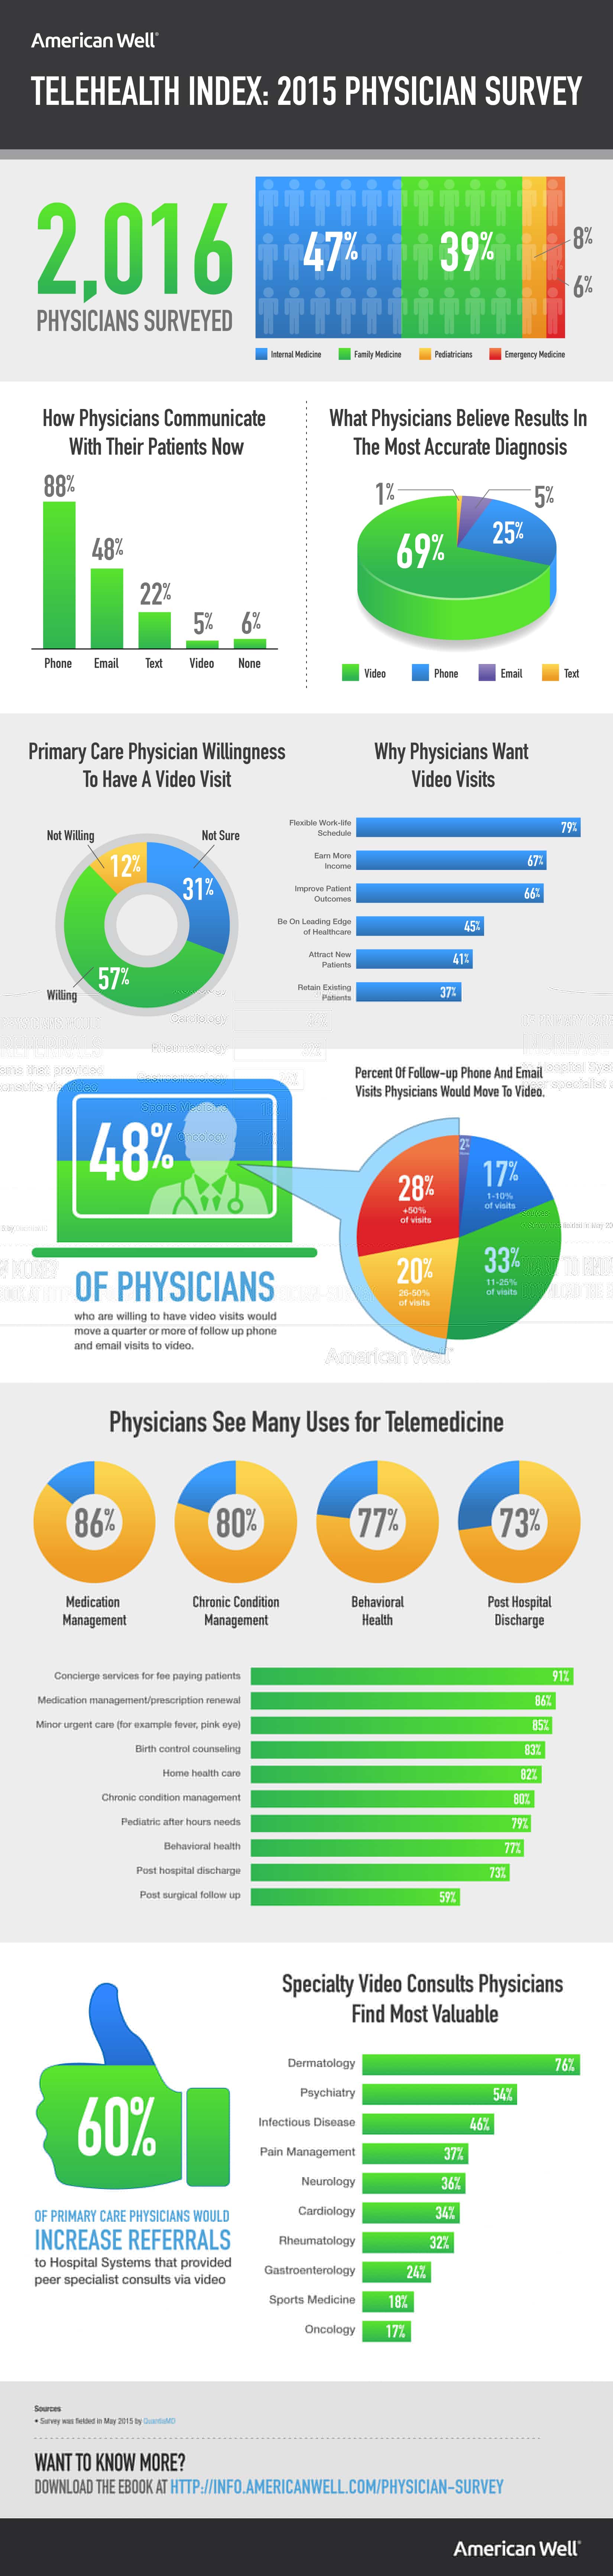 Physician_Survey_InfographicV2_Large